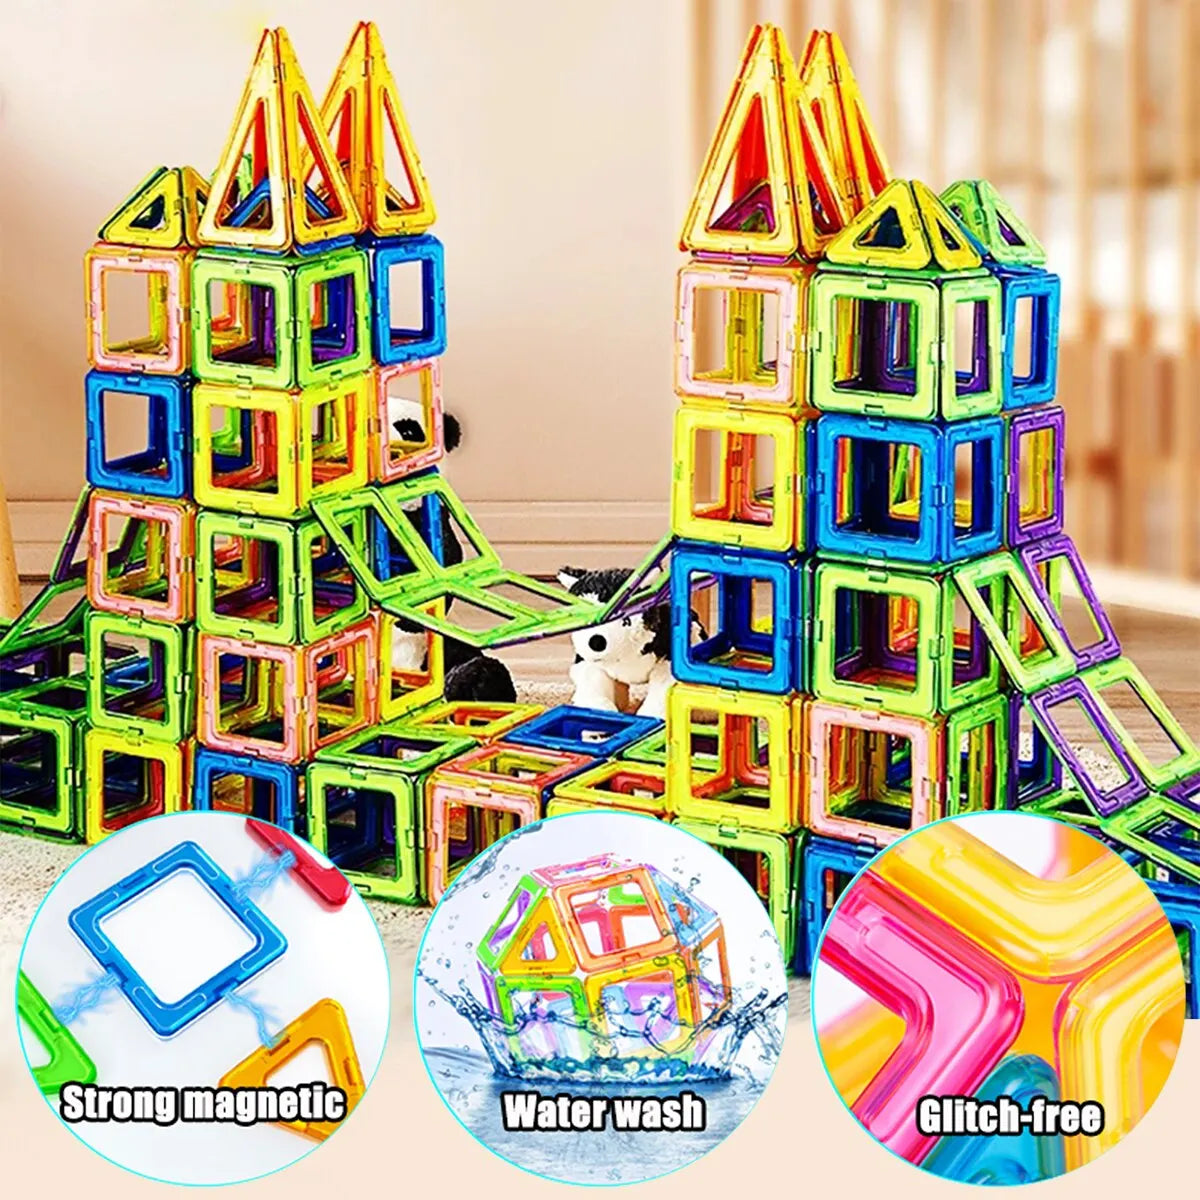 Magnetic Building Blocks Big Size and Mini Size DIY Magnets Toys for Kids Designer Construction Set Gifts for Children Toys